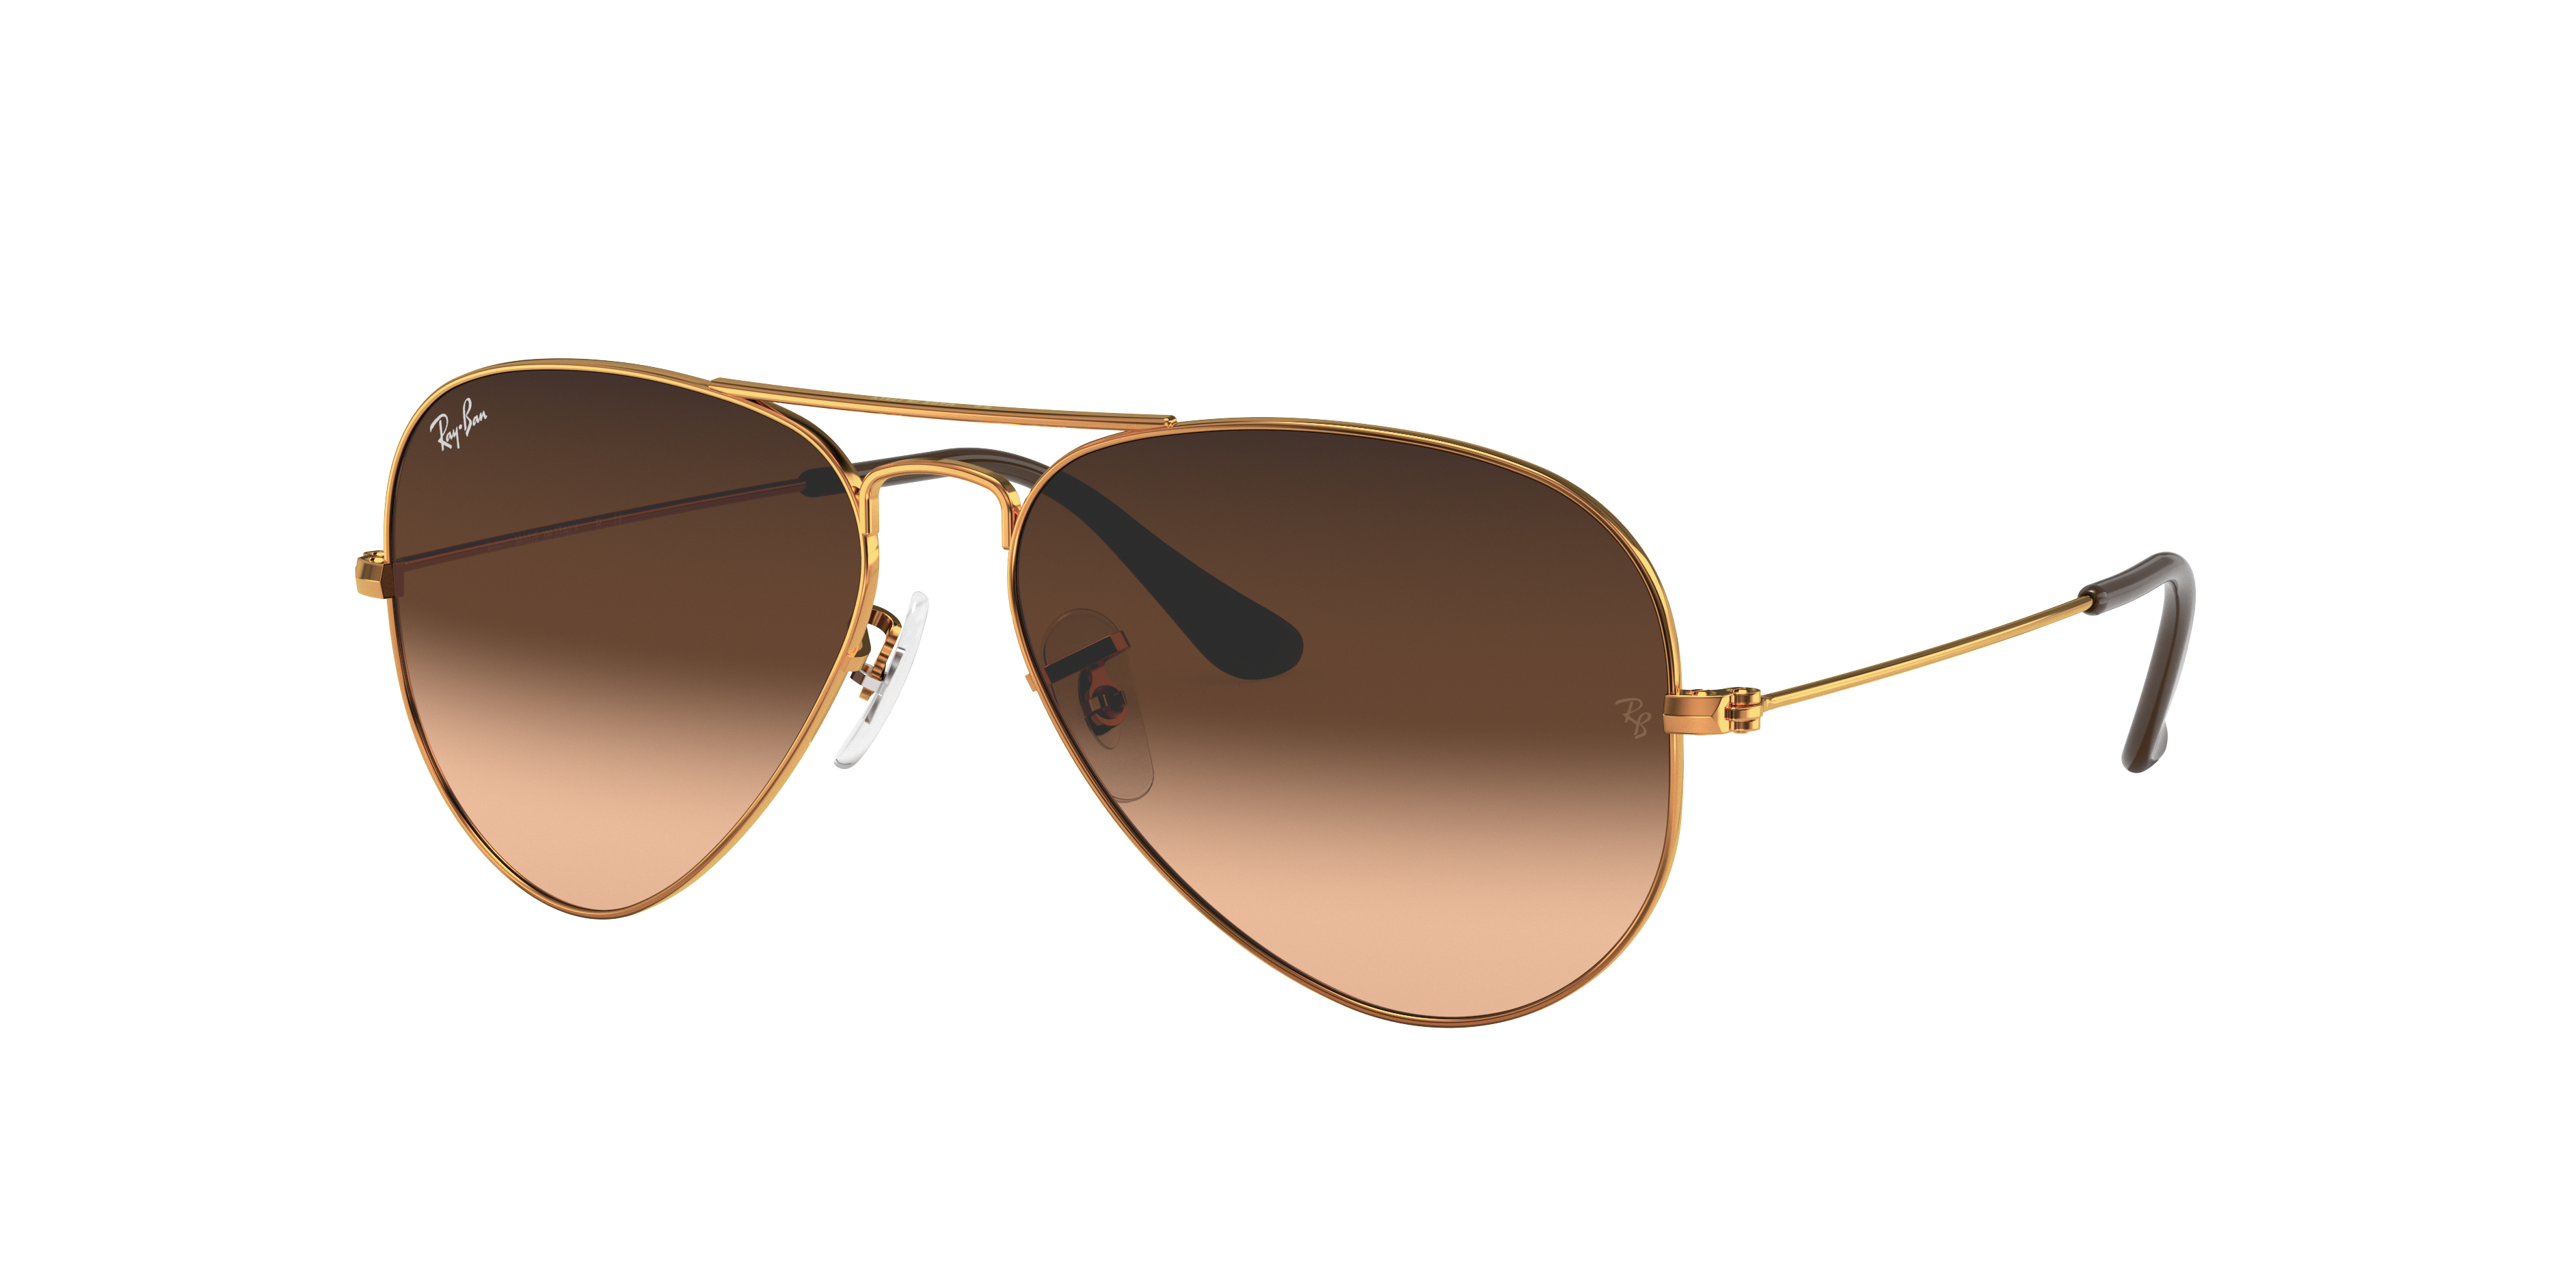 Derbevilletest Gooi Bezet Aviator Gradient Sunglasses in Light Brown and Pink/Brown | Ray-Ban®